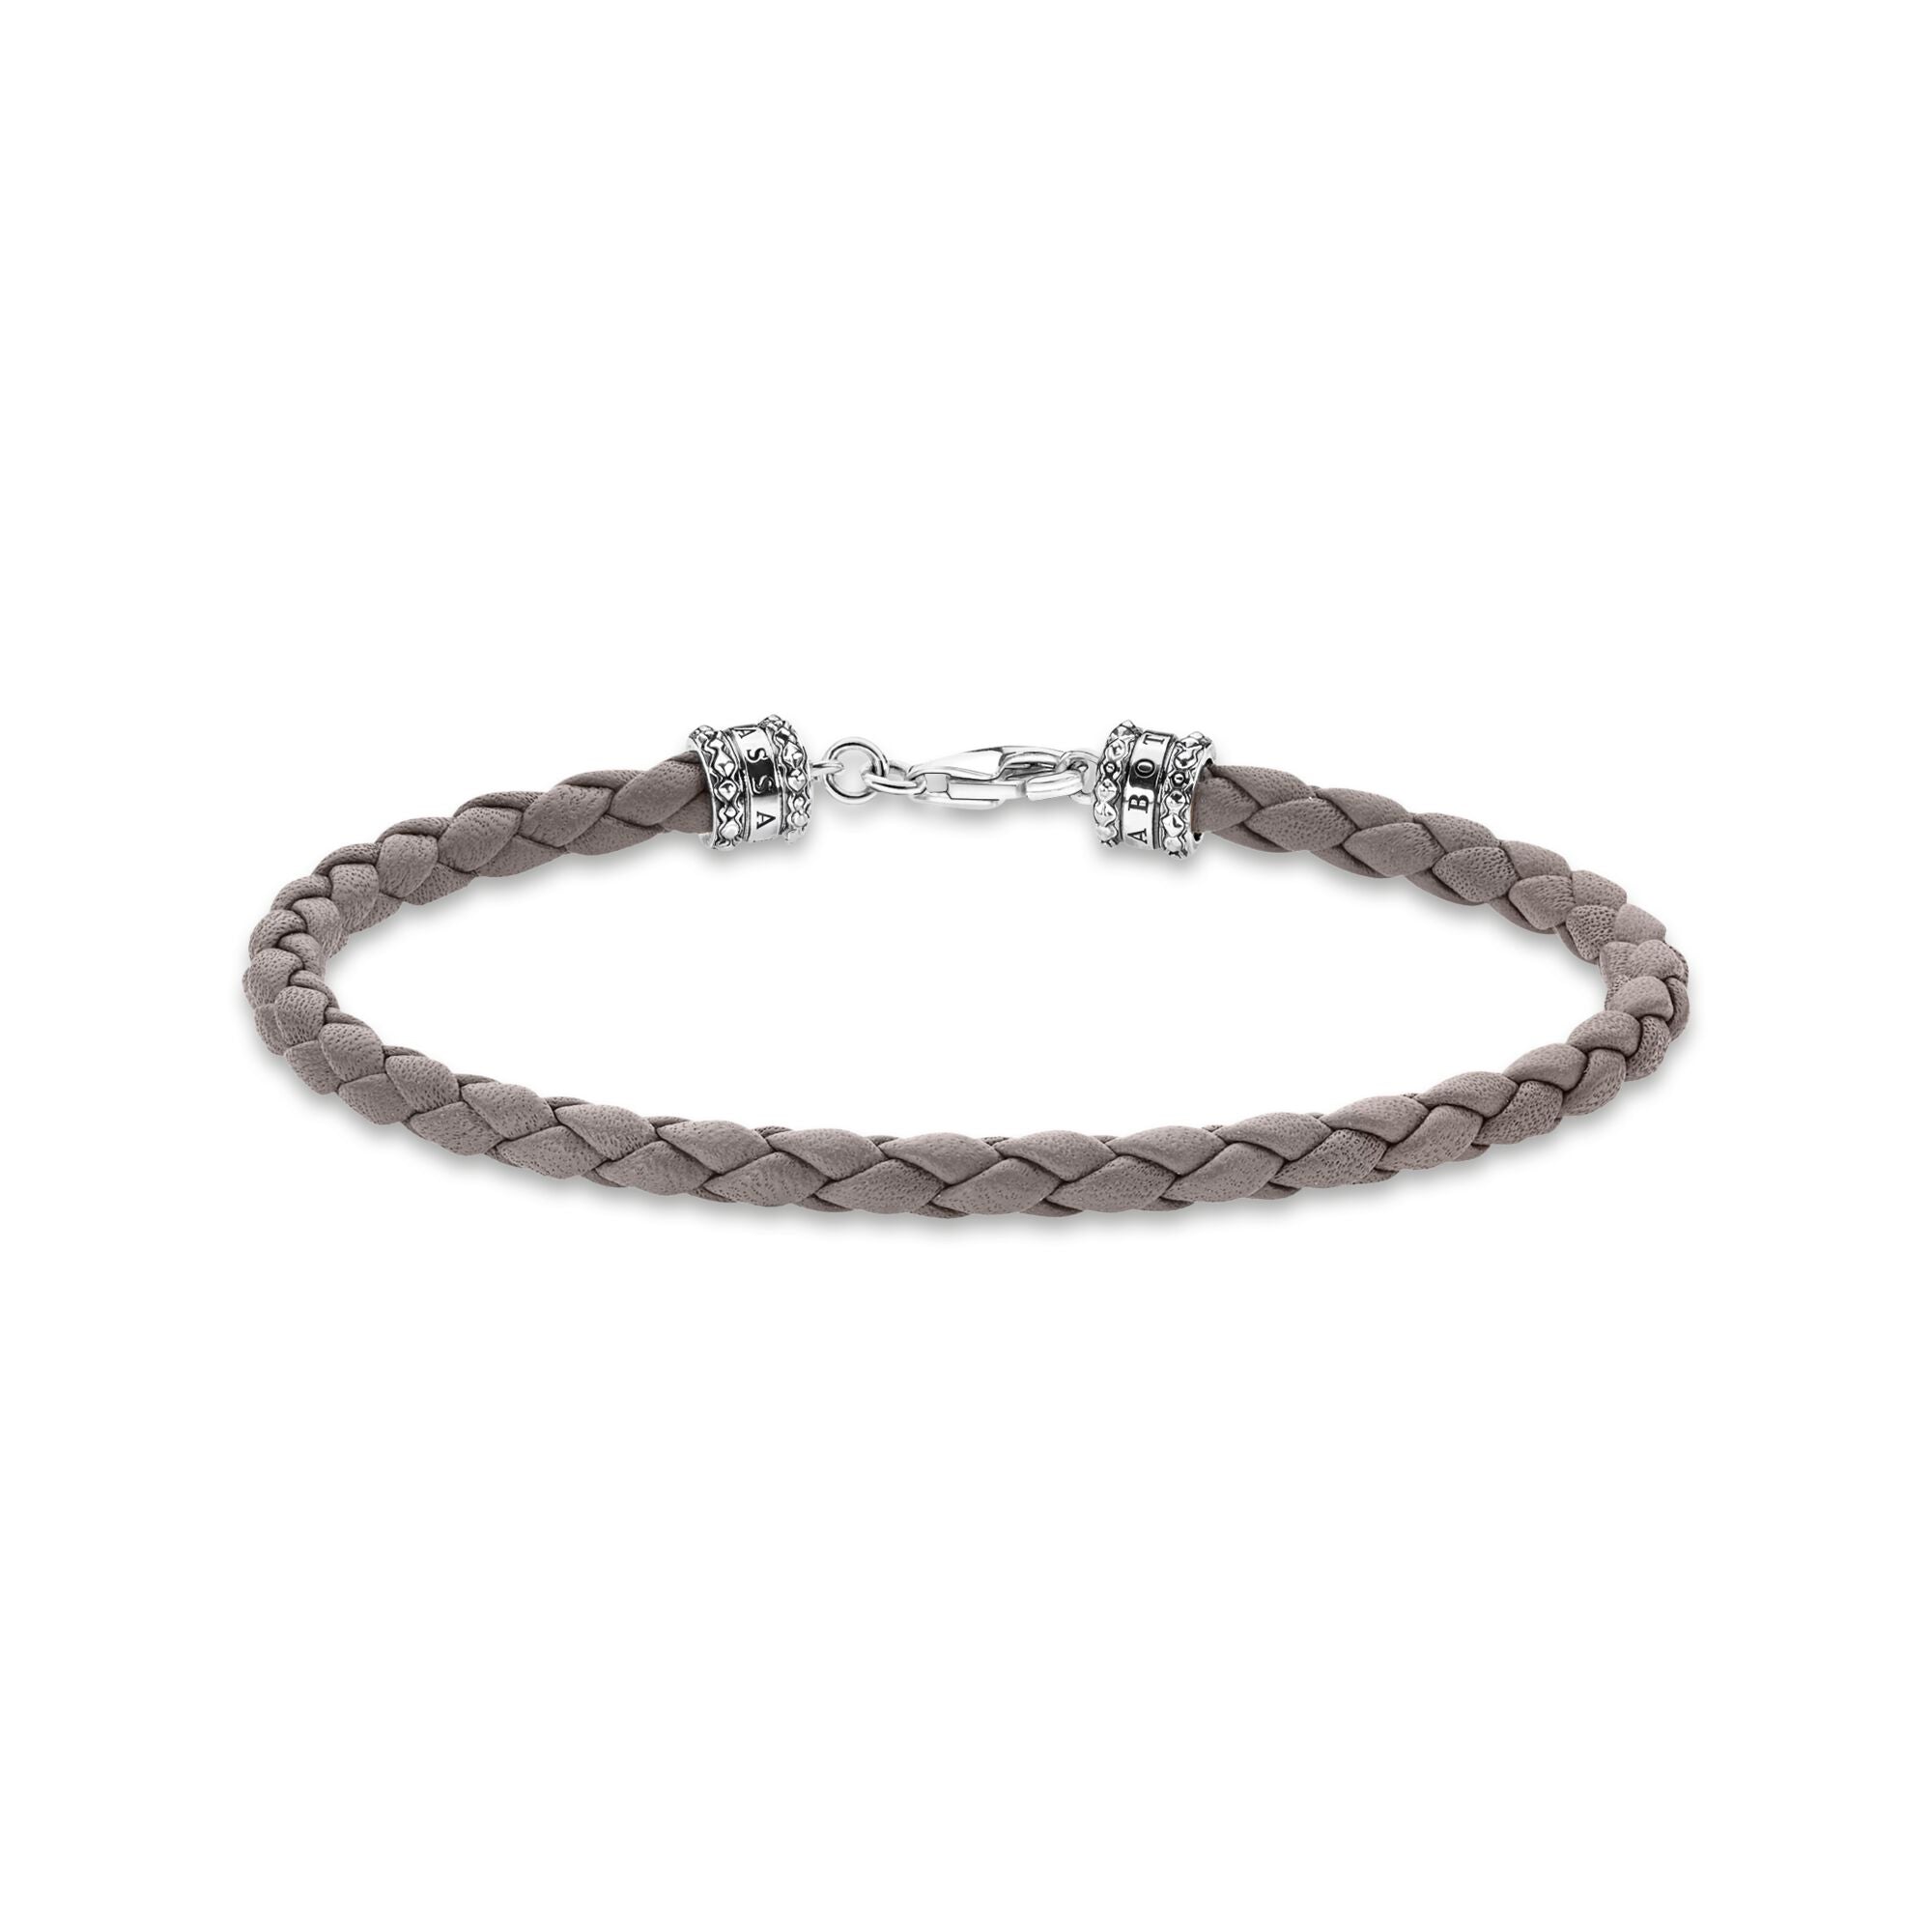 Thomas Sabo  Leather bracelet grey A2011-682-5-L19